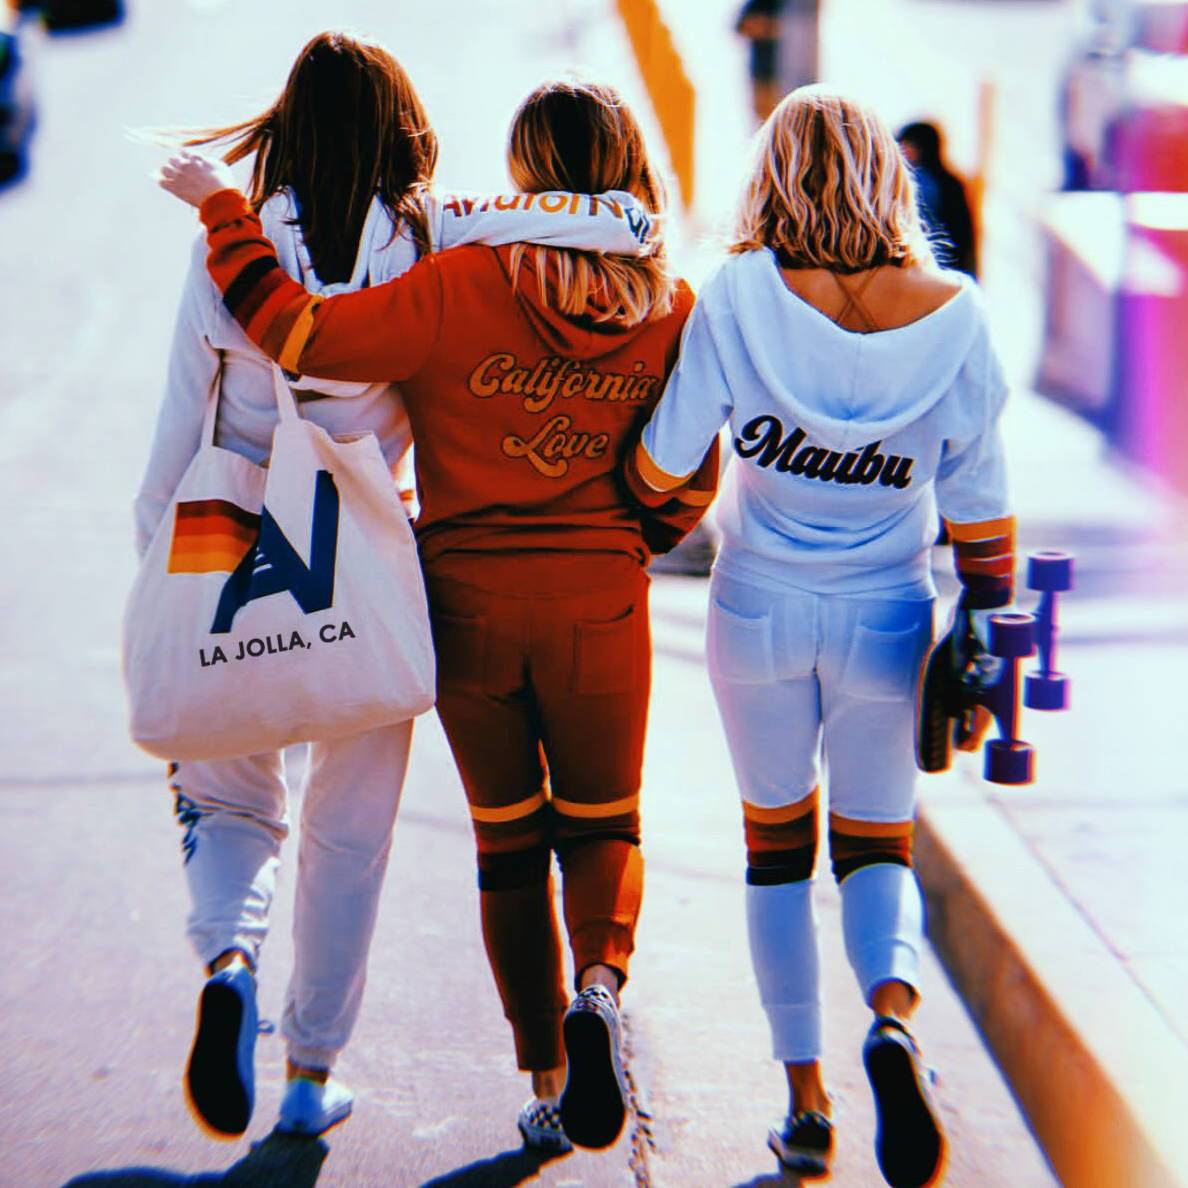 3 girls walking down the street dressed in Aviator Nation sweatsuits